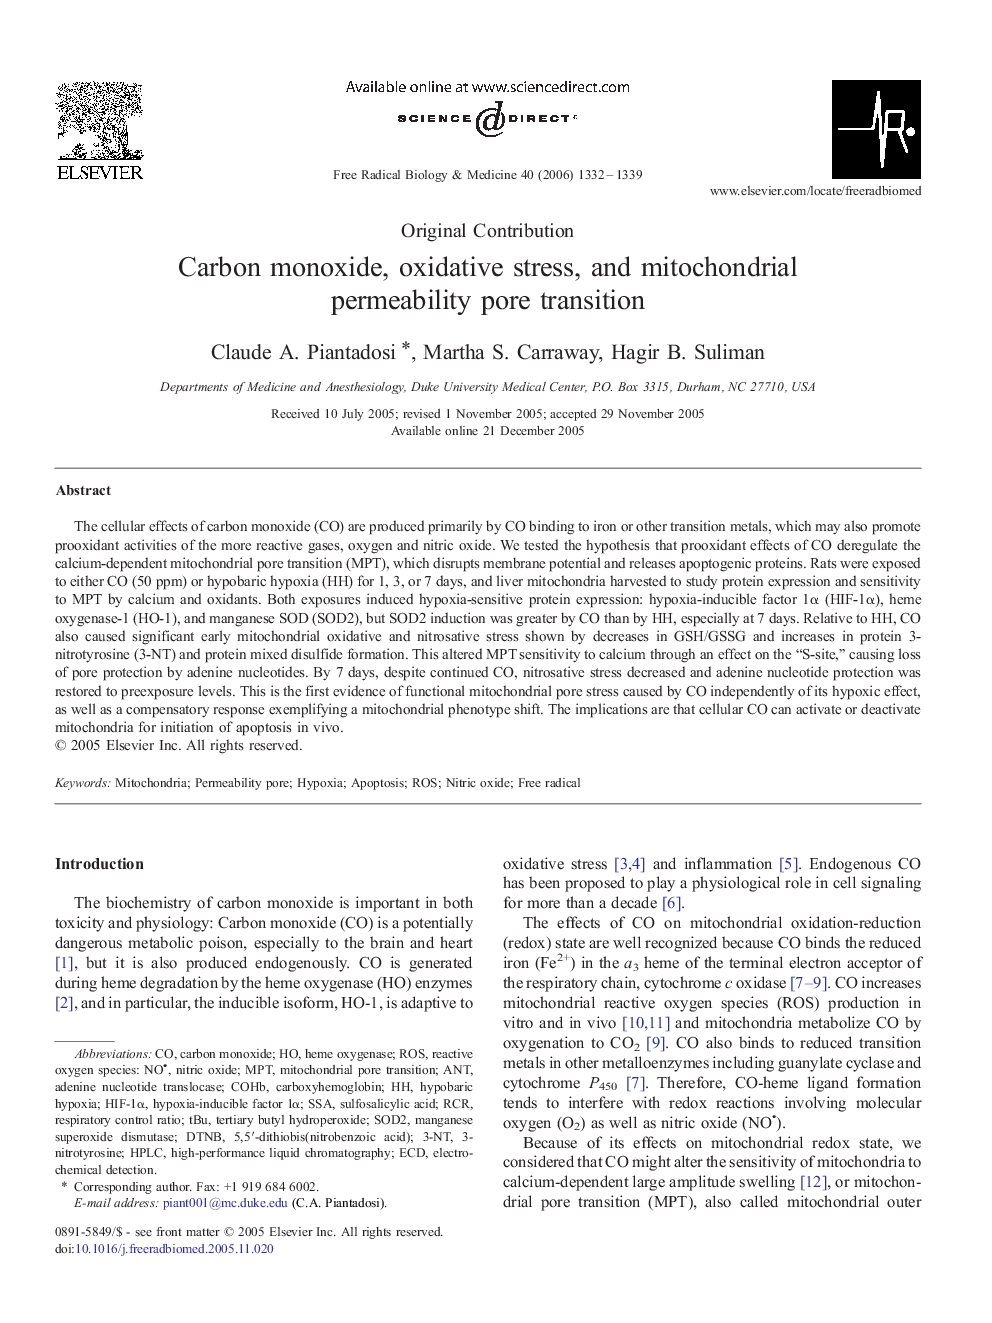 Carbon monoxide, oxidative stress, and mitochondrial permeability pore transition